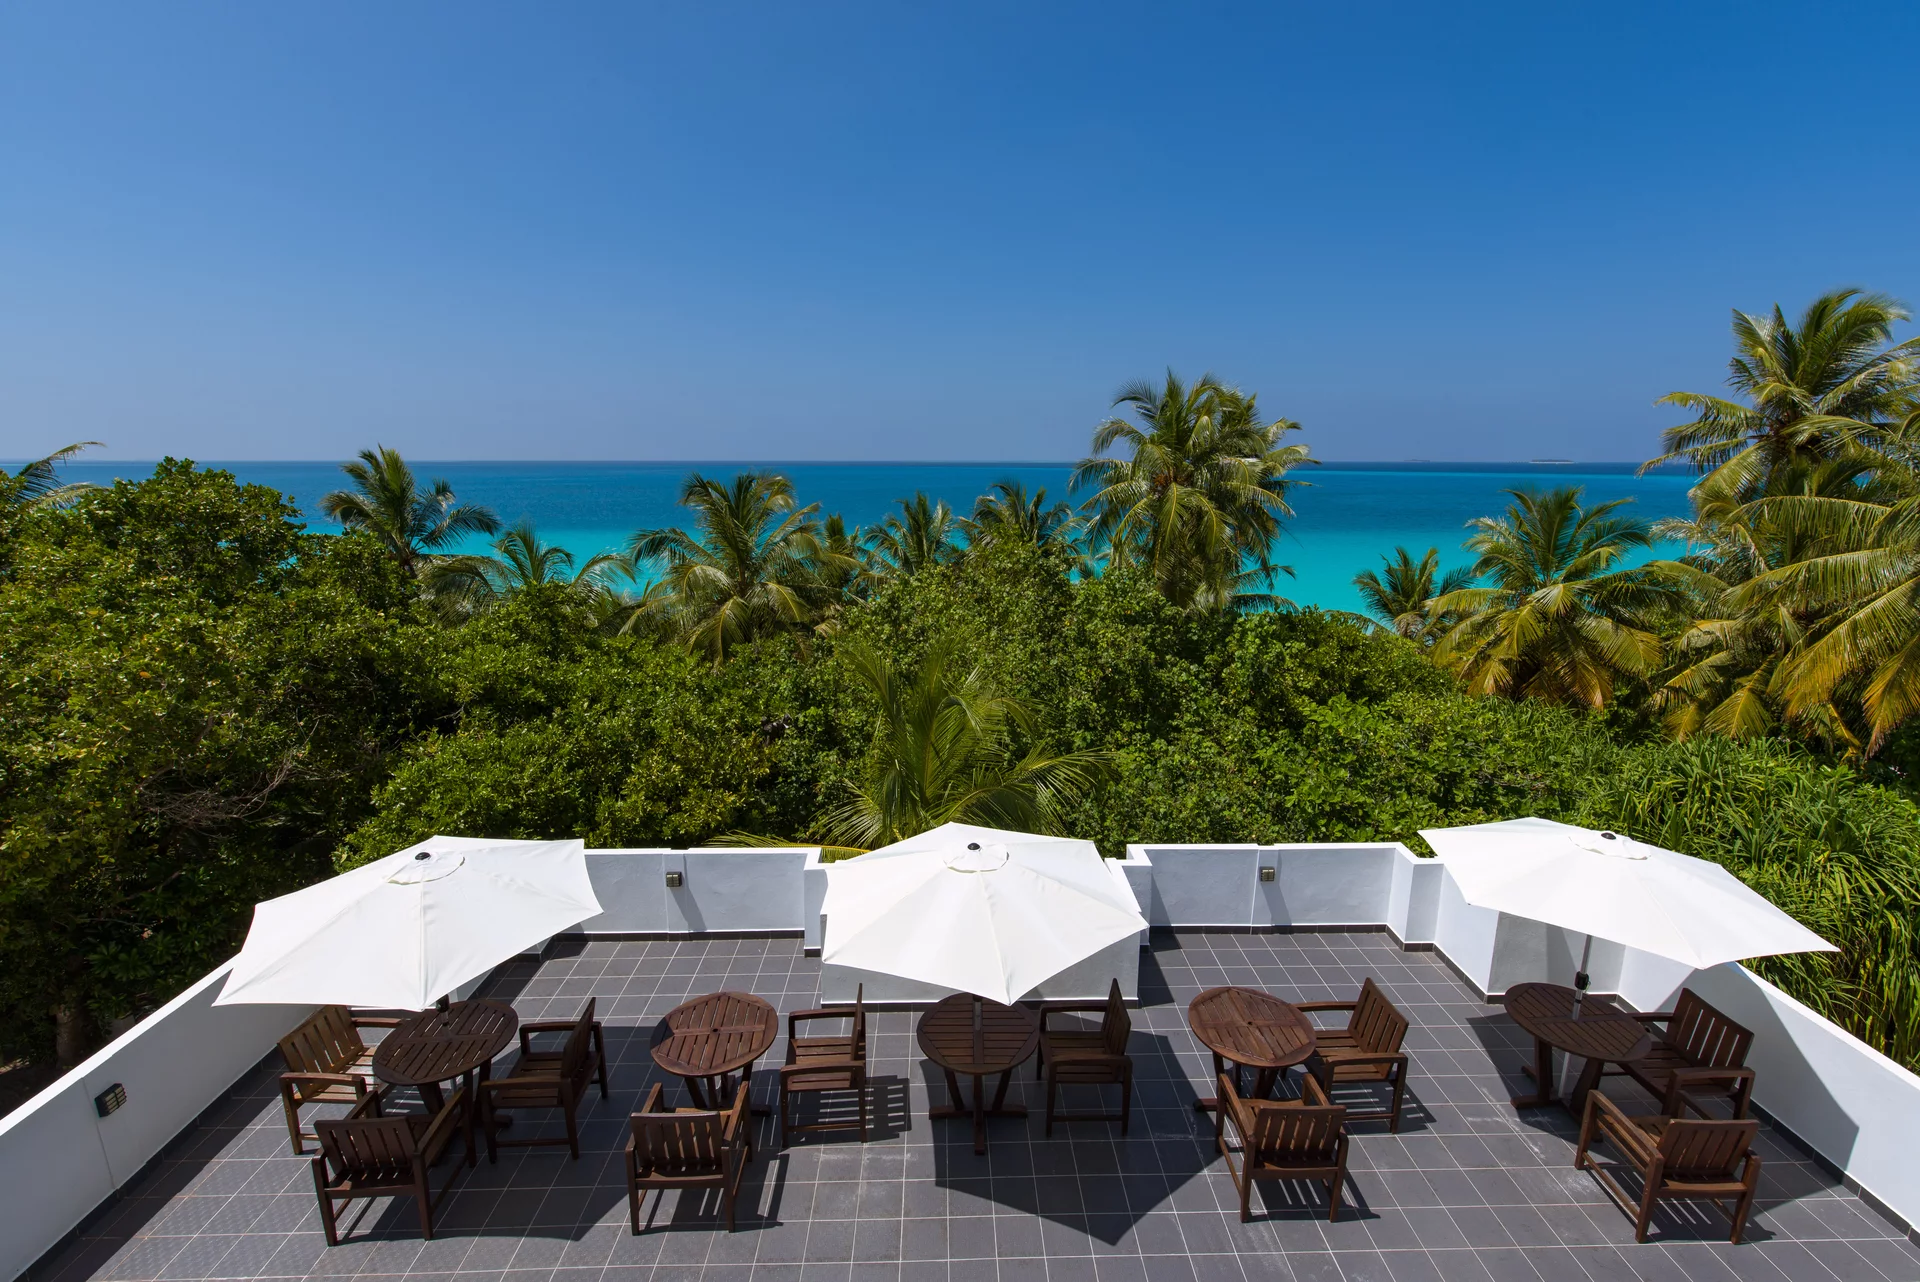 The boutique beach resort in the Maldives